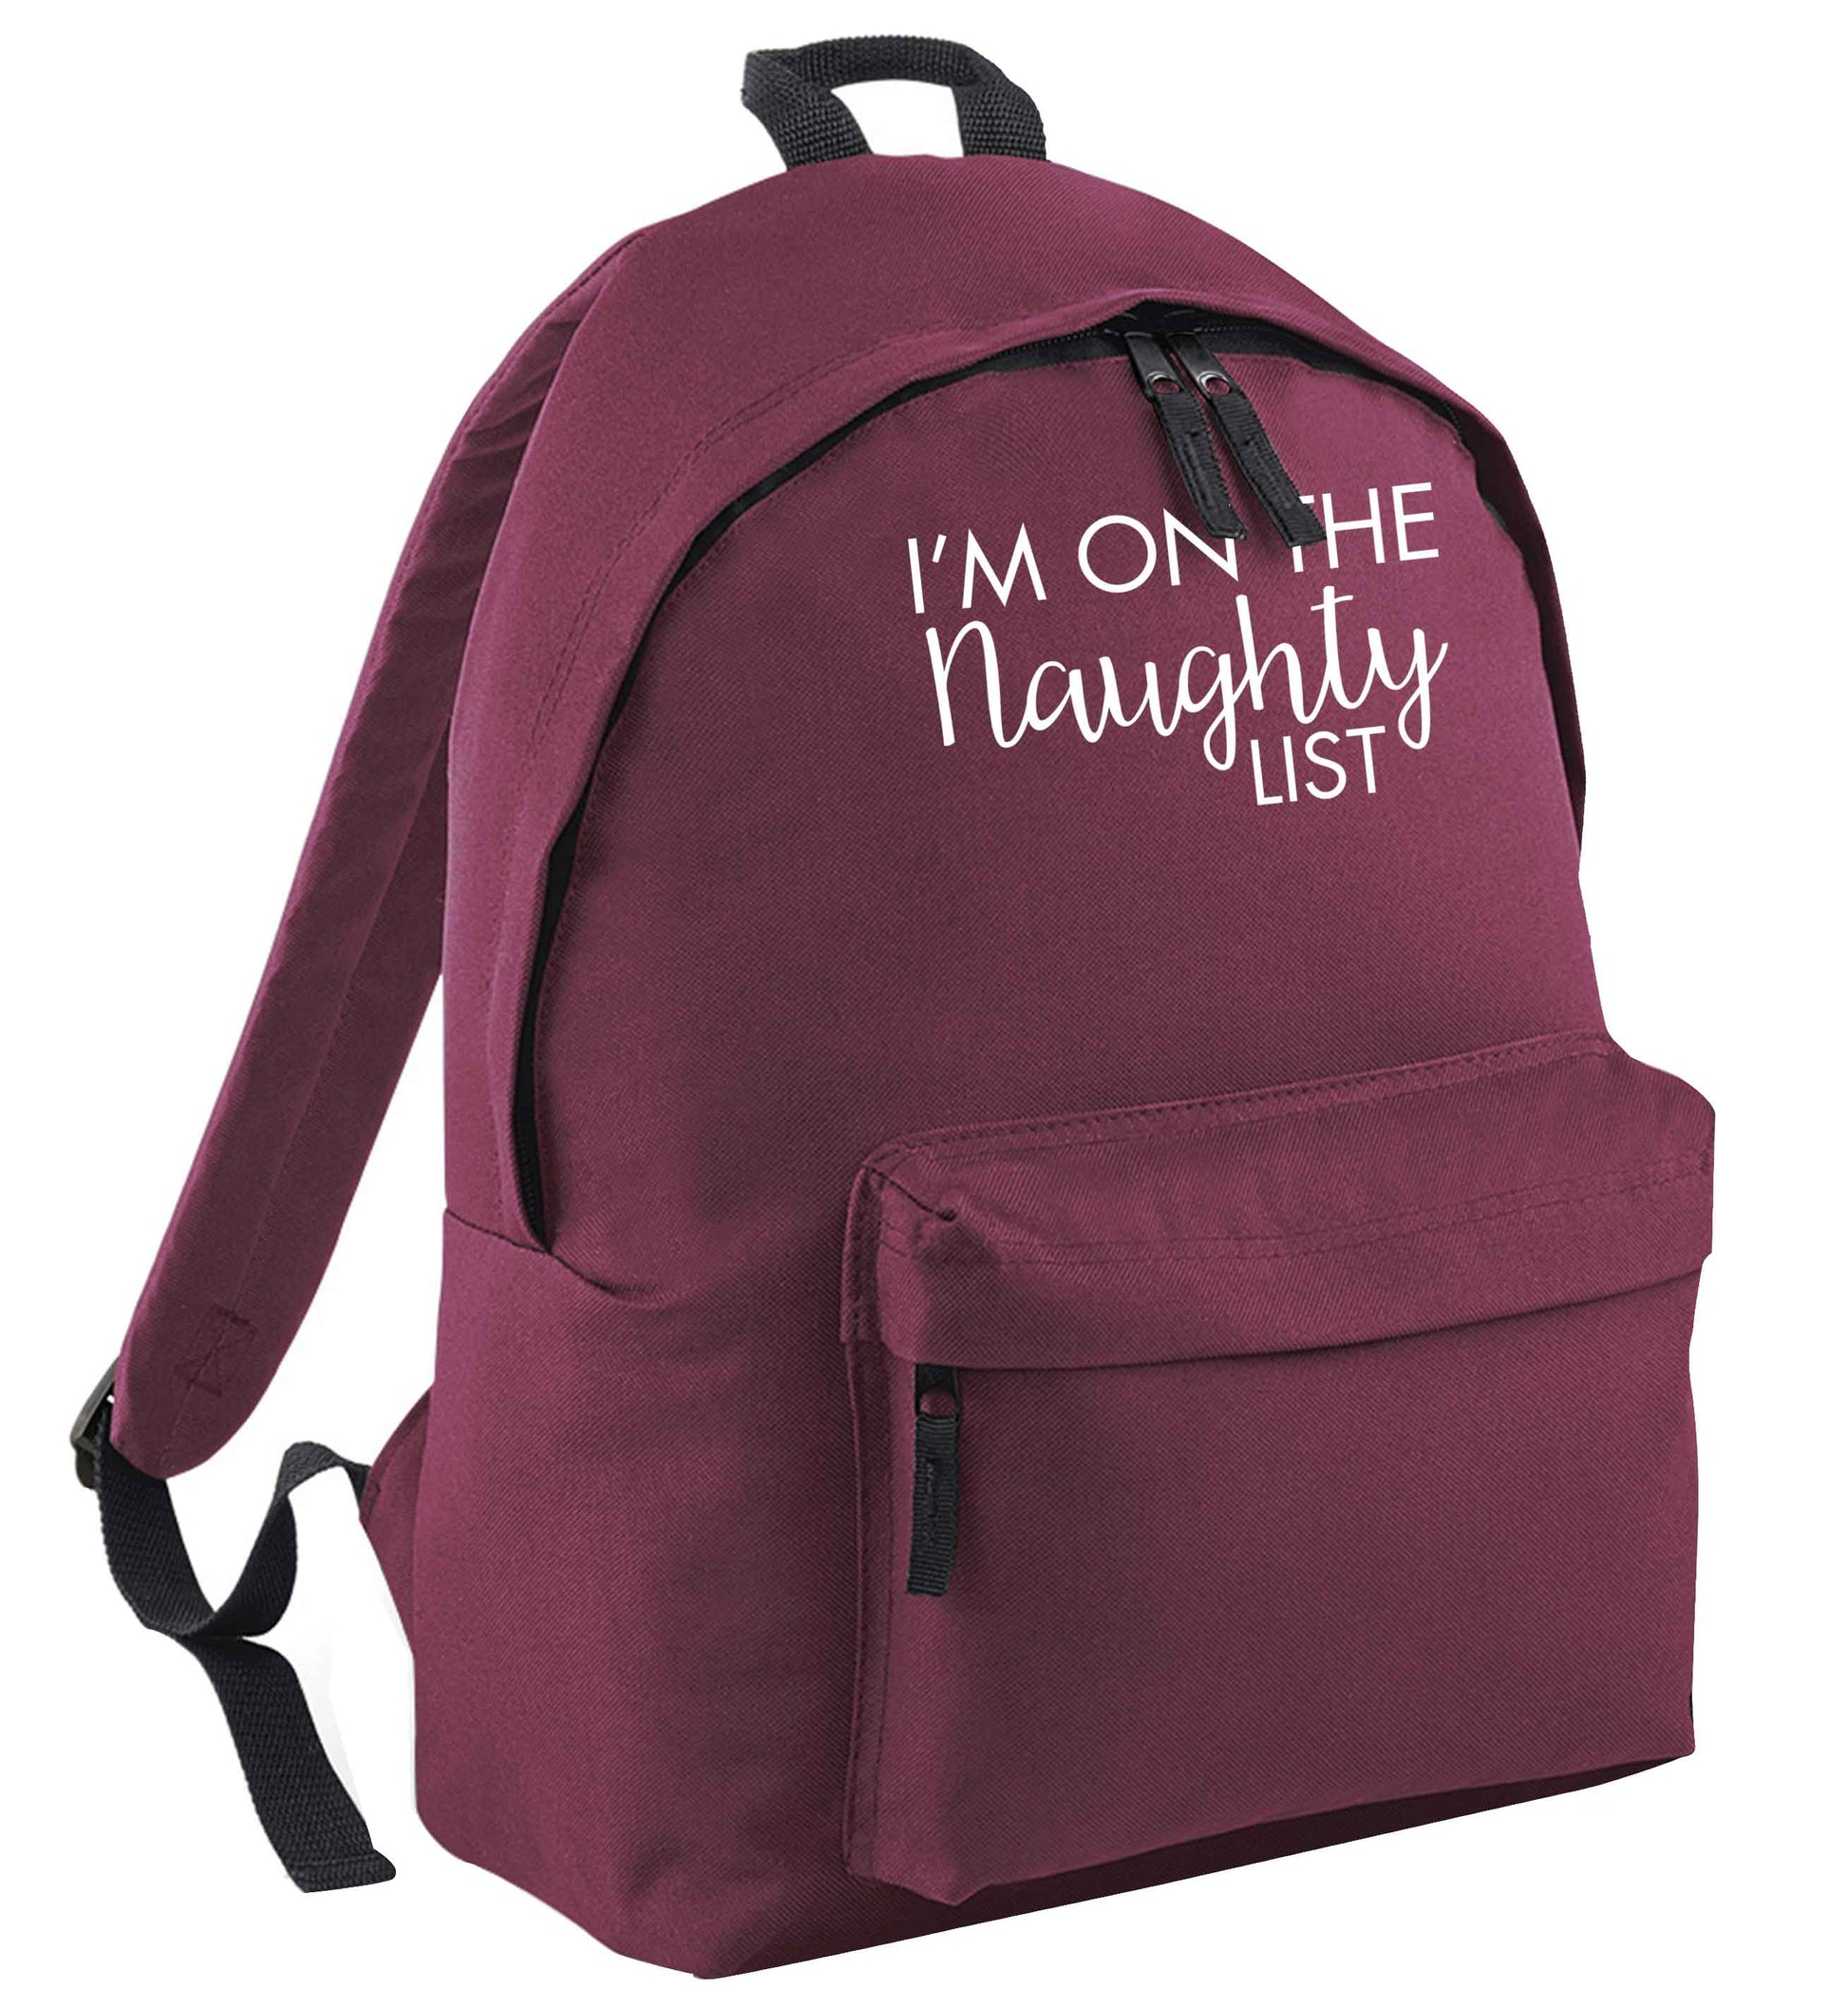 I'm on the naughty list | Children's backpack